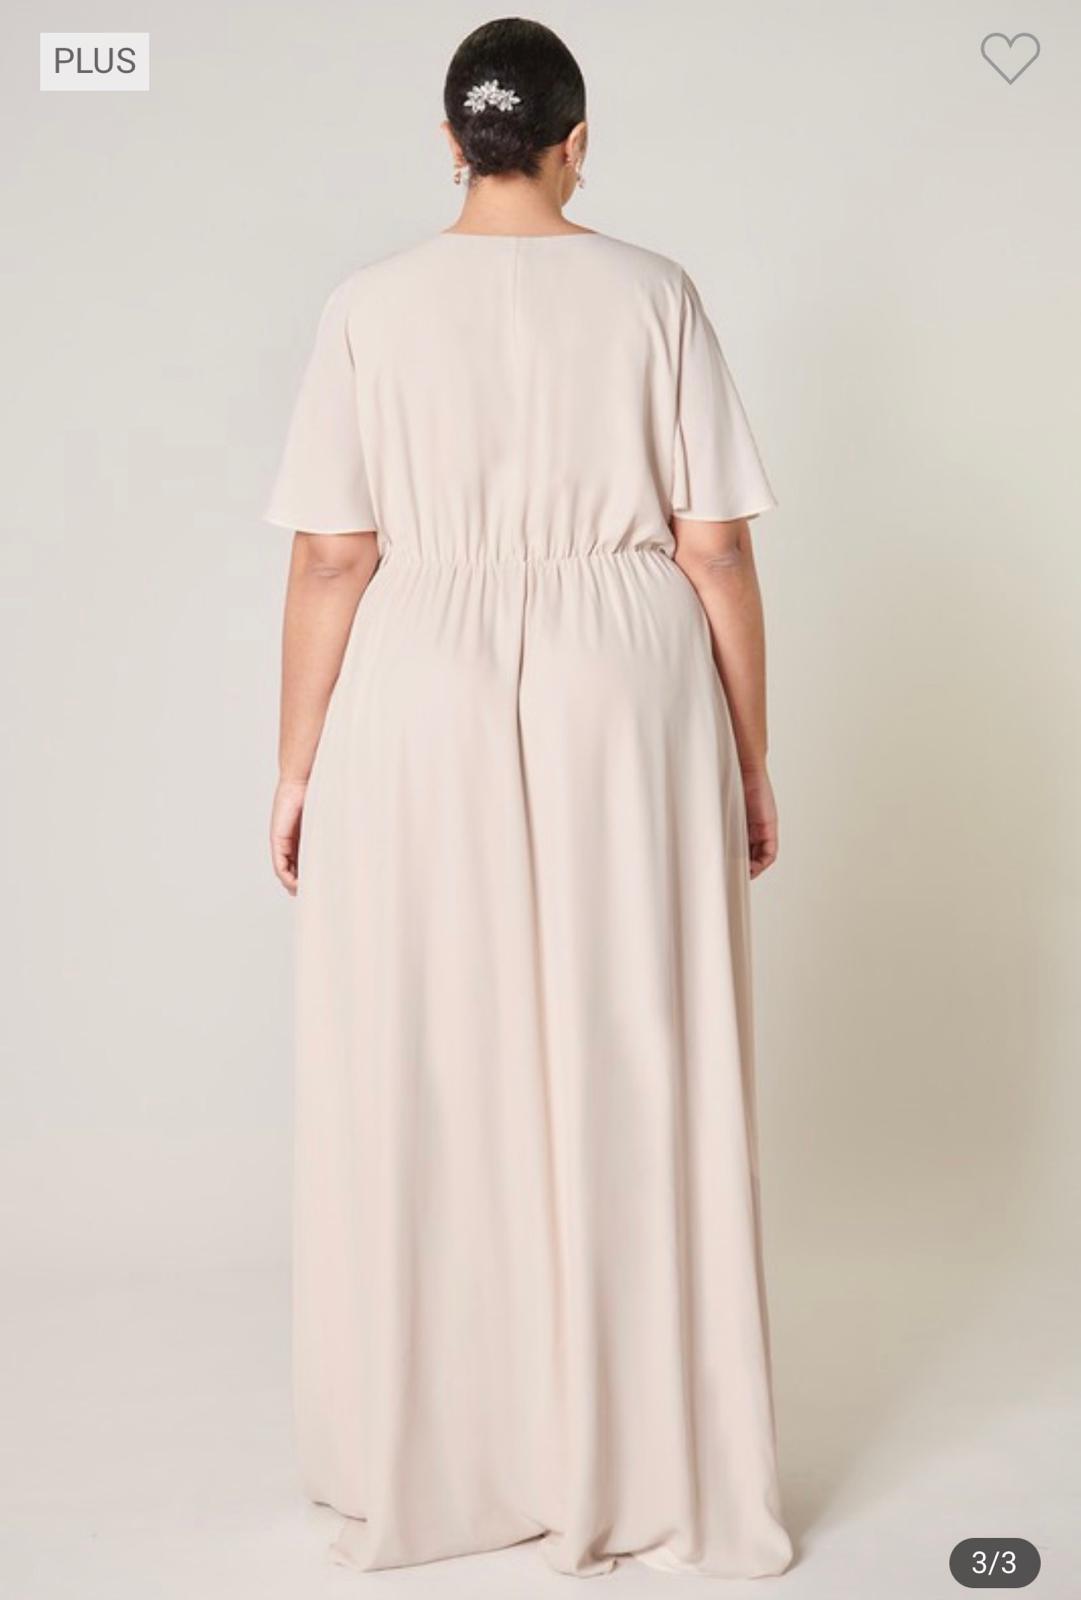 Aella - Ivory Maxi Dress